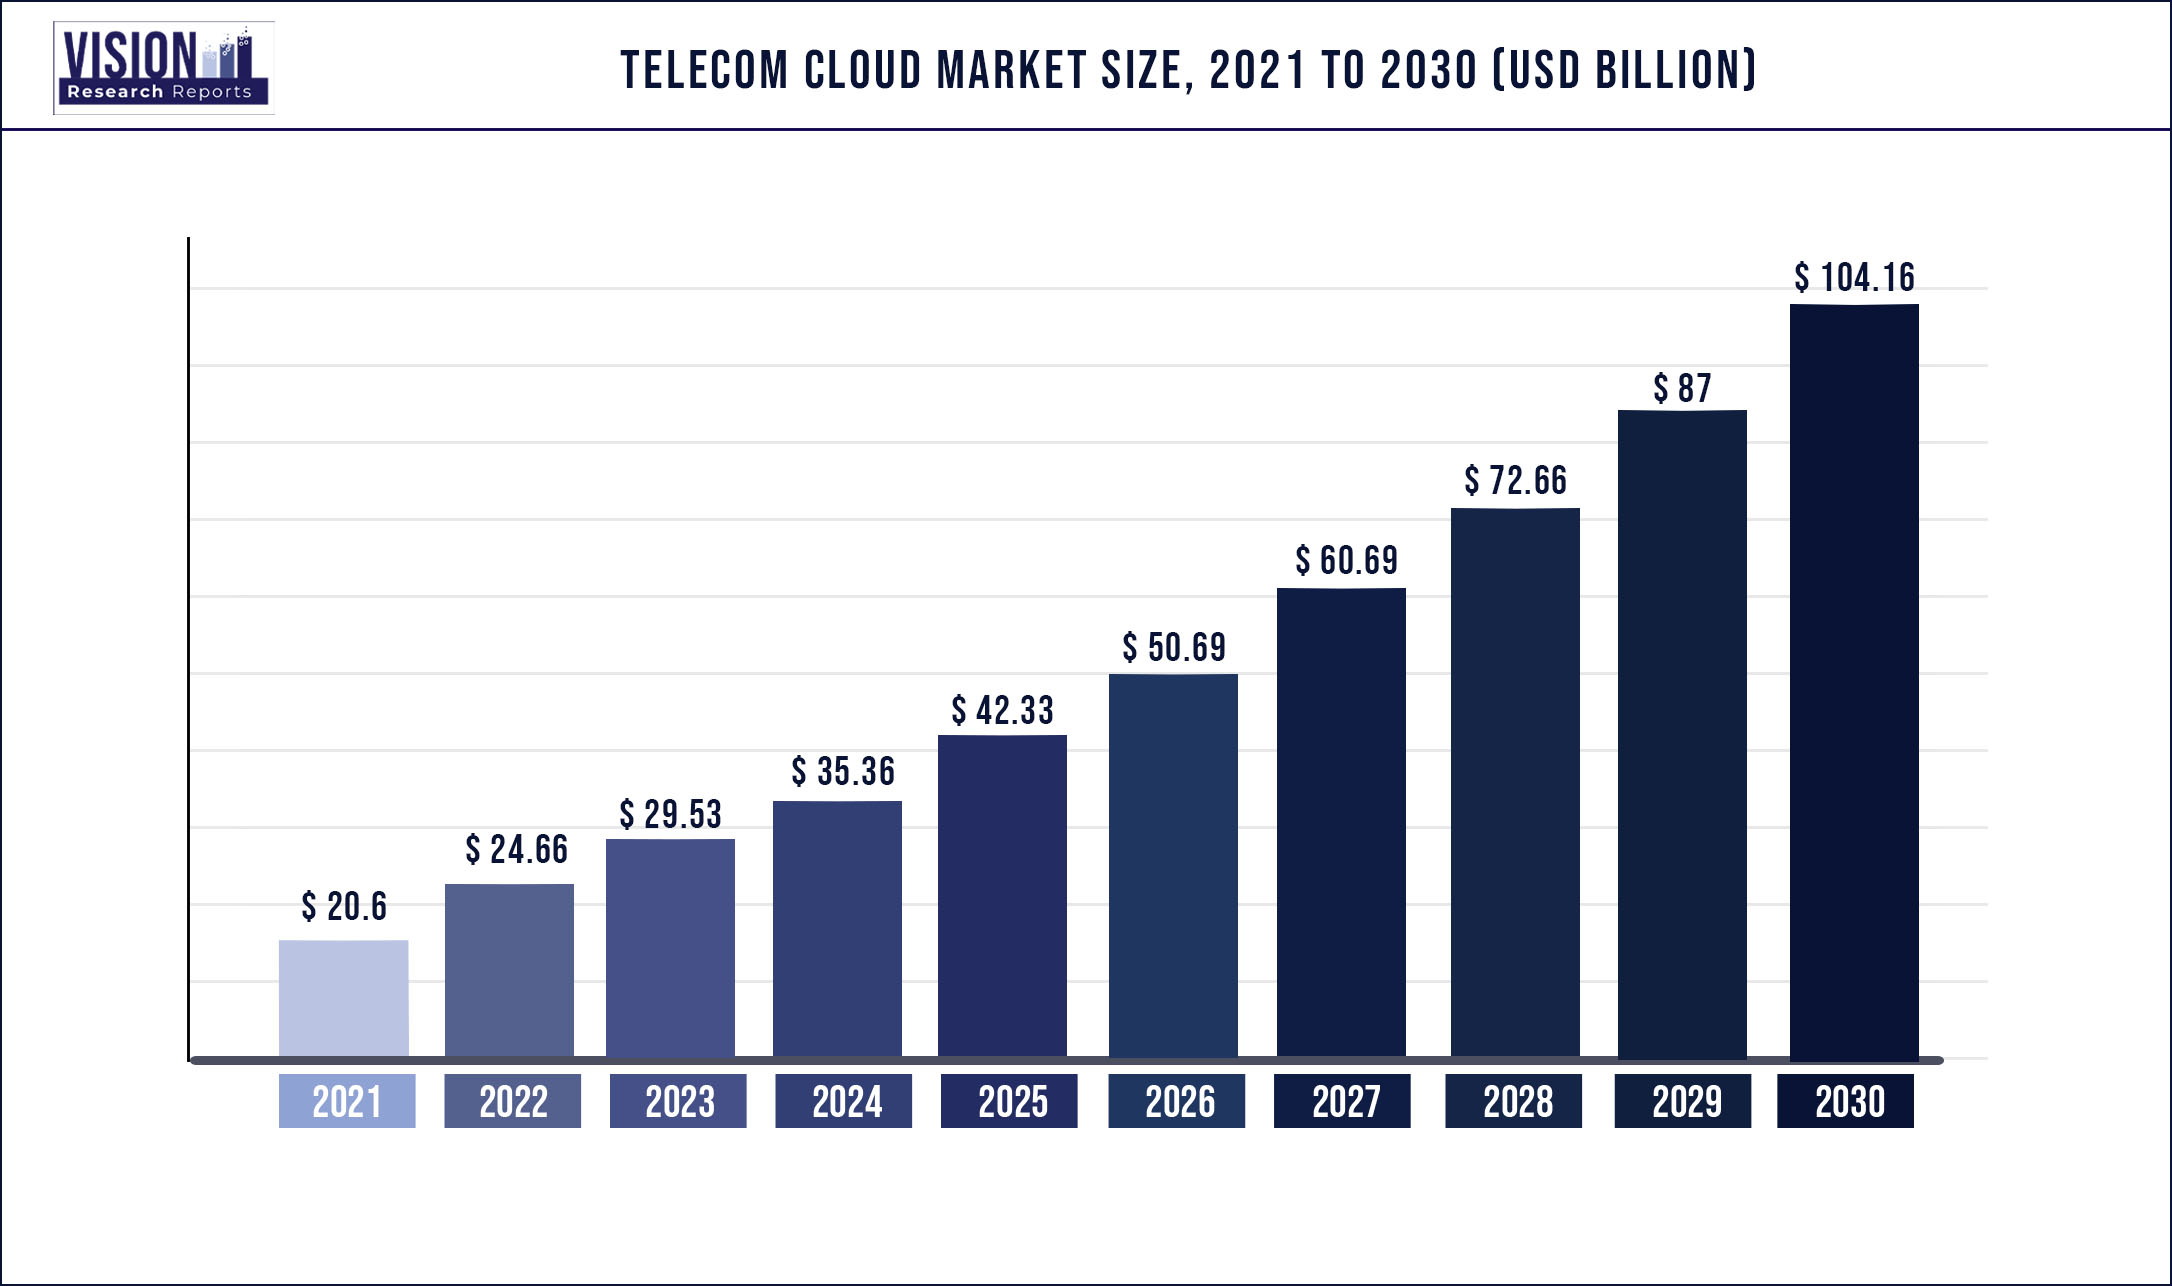 Telecom Cloud Market Size 2021 to 2030